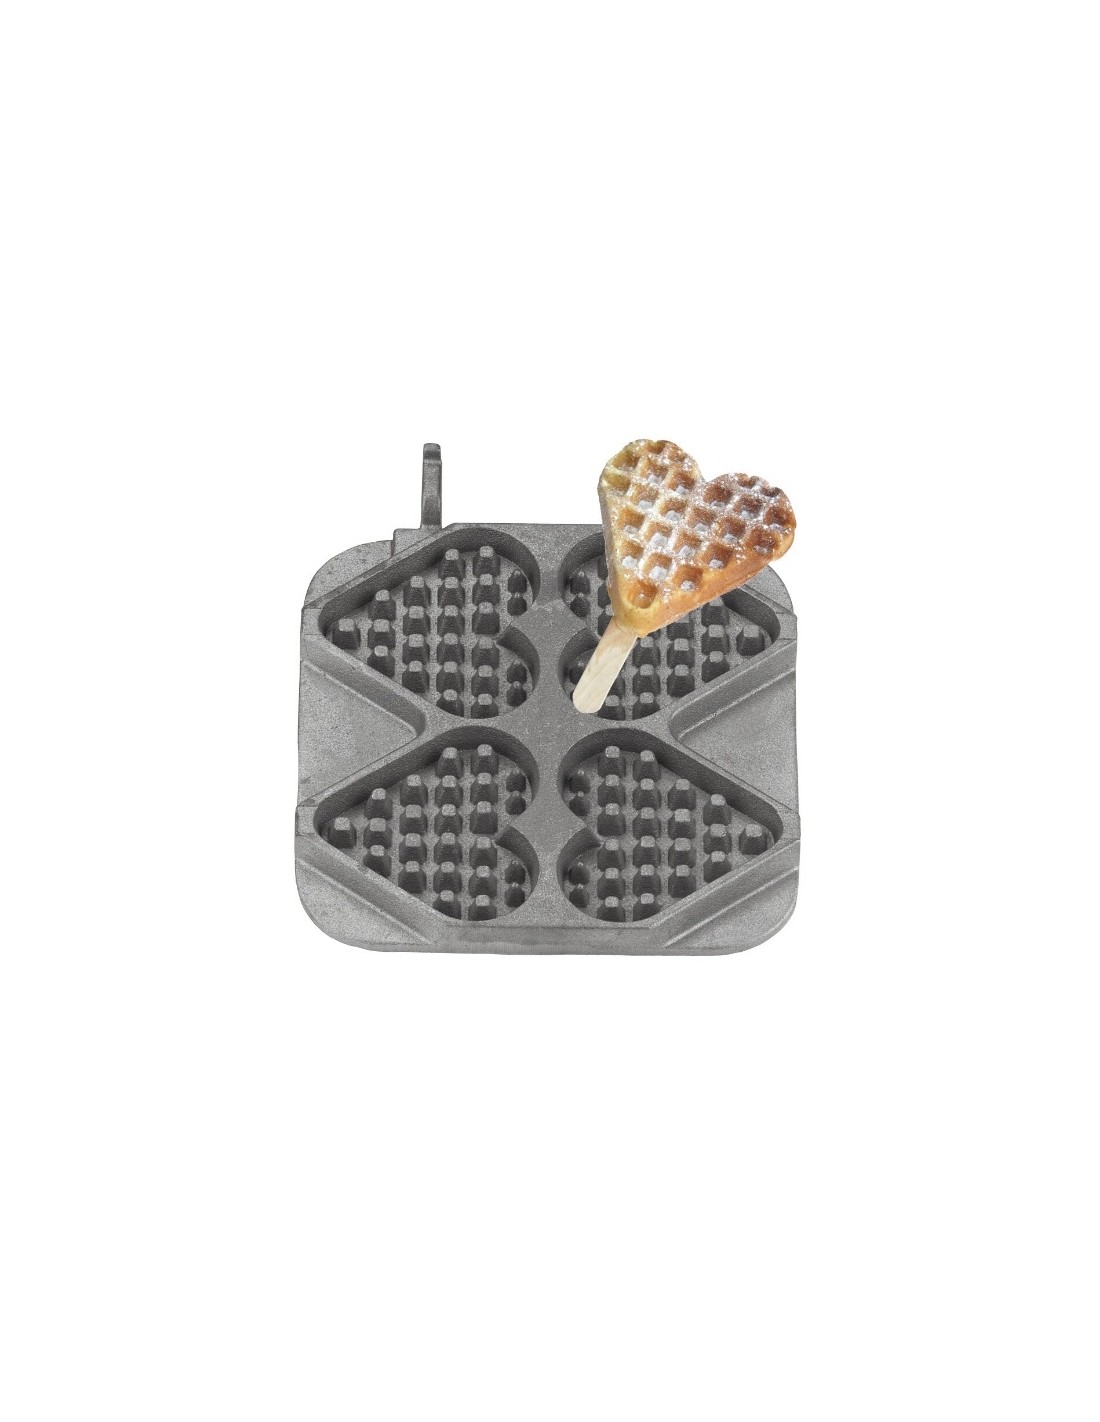 Interchangeable waffel plate - SHAPE: 4 waffels 15x12x3 cm - On stick - Cast iron